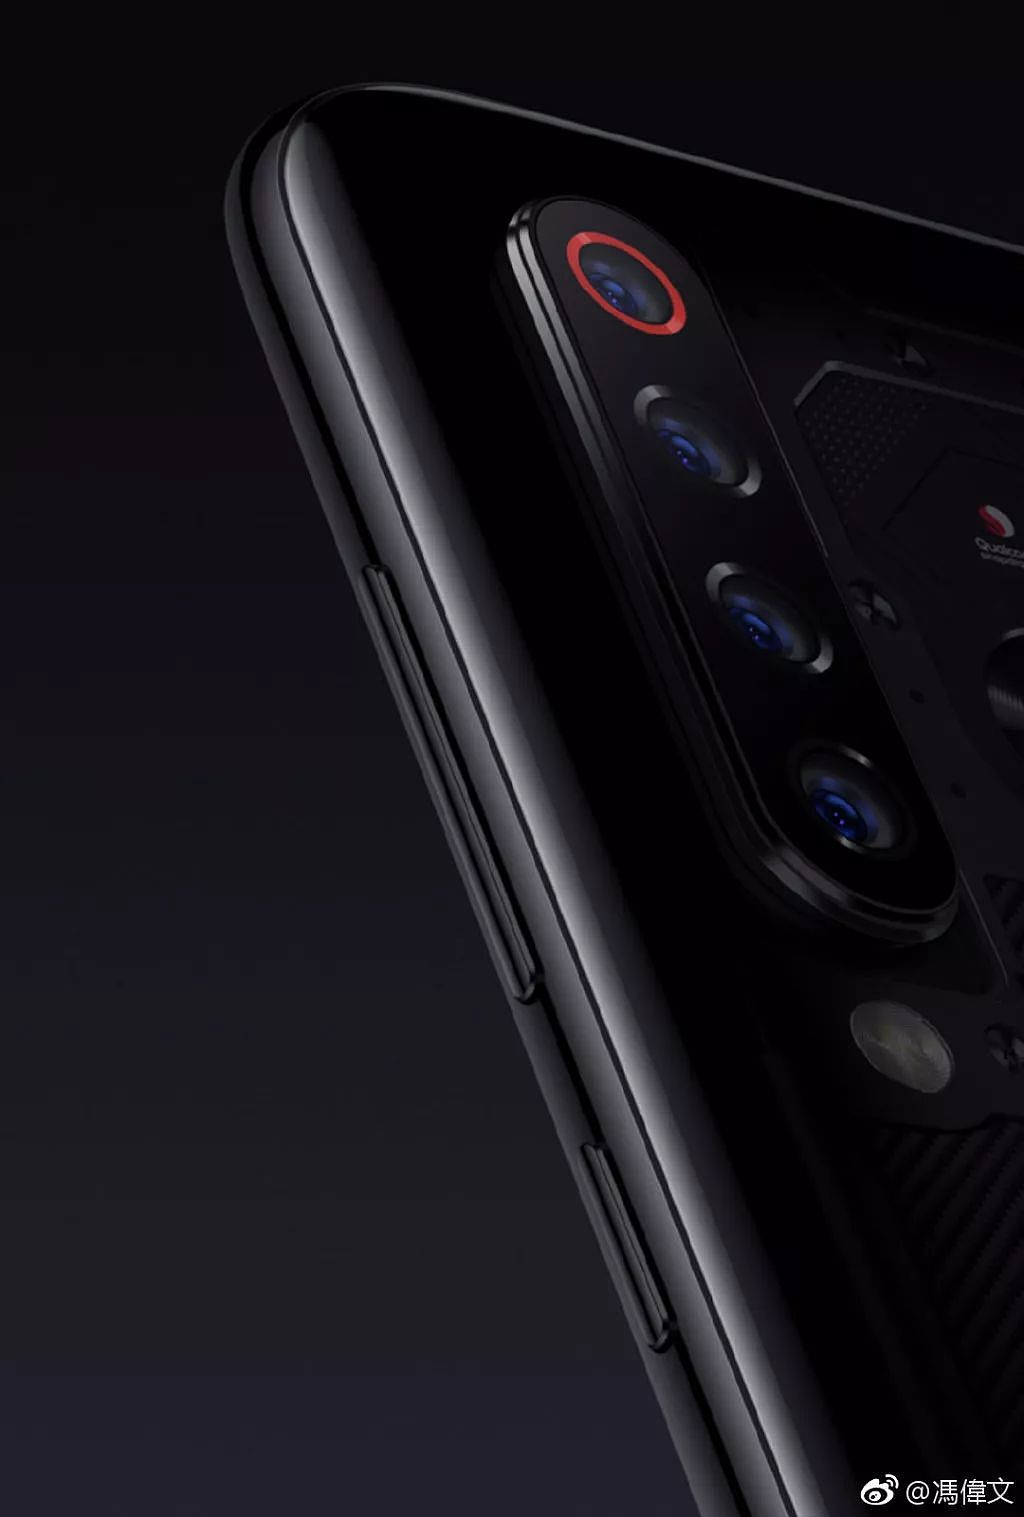 iPhone XS 或将推出红色版 / 小米 9 透明探索版曝光 / 阿里巴巴入股 B 站 - 5